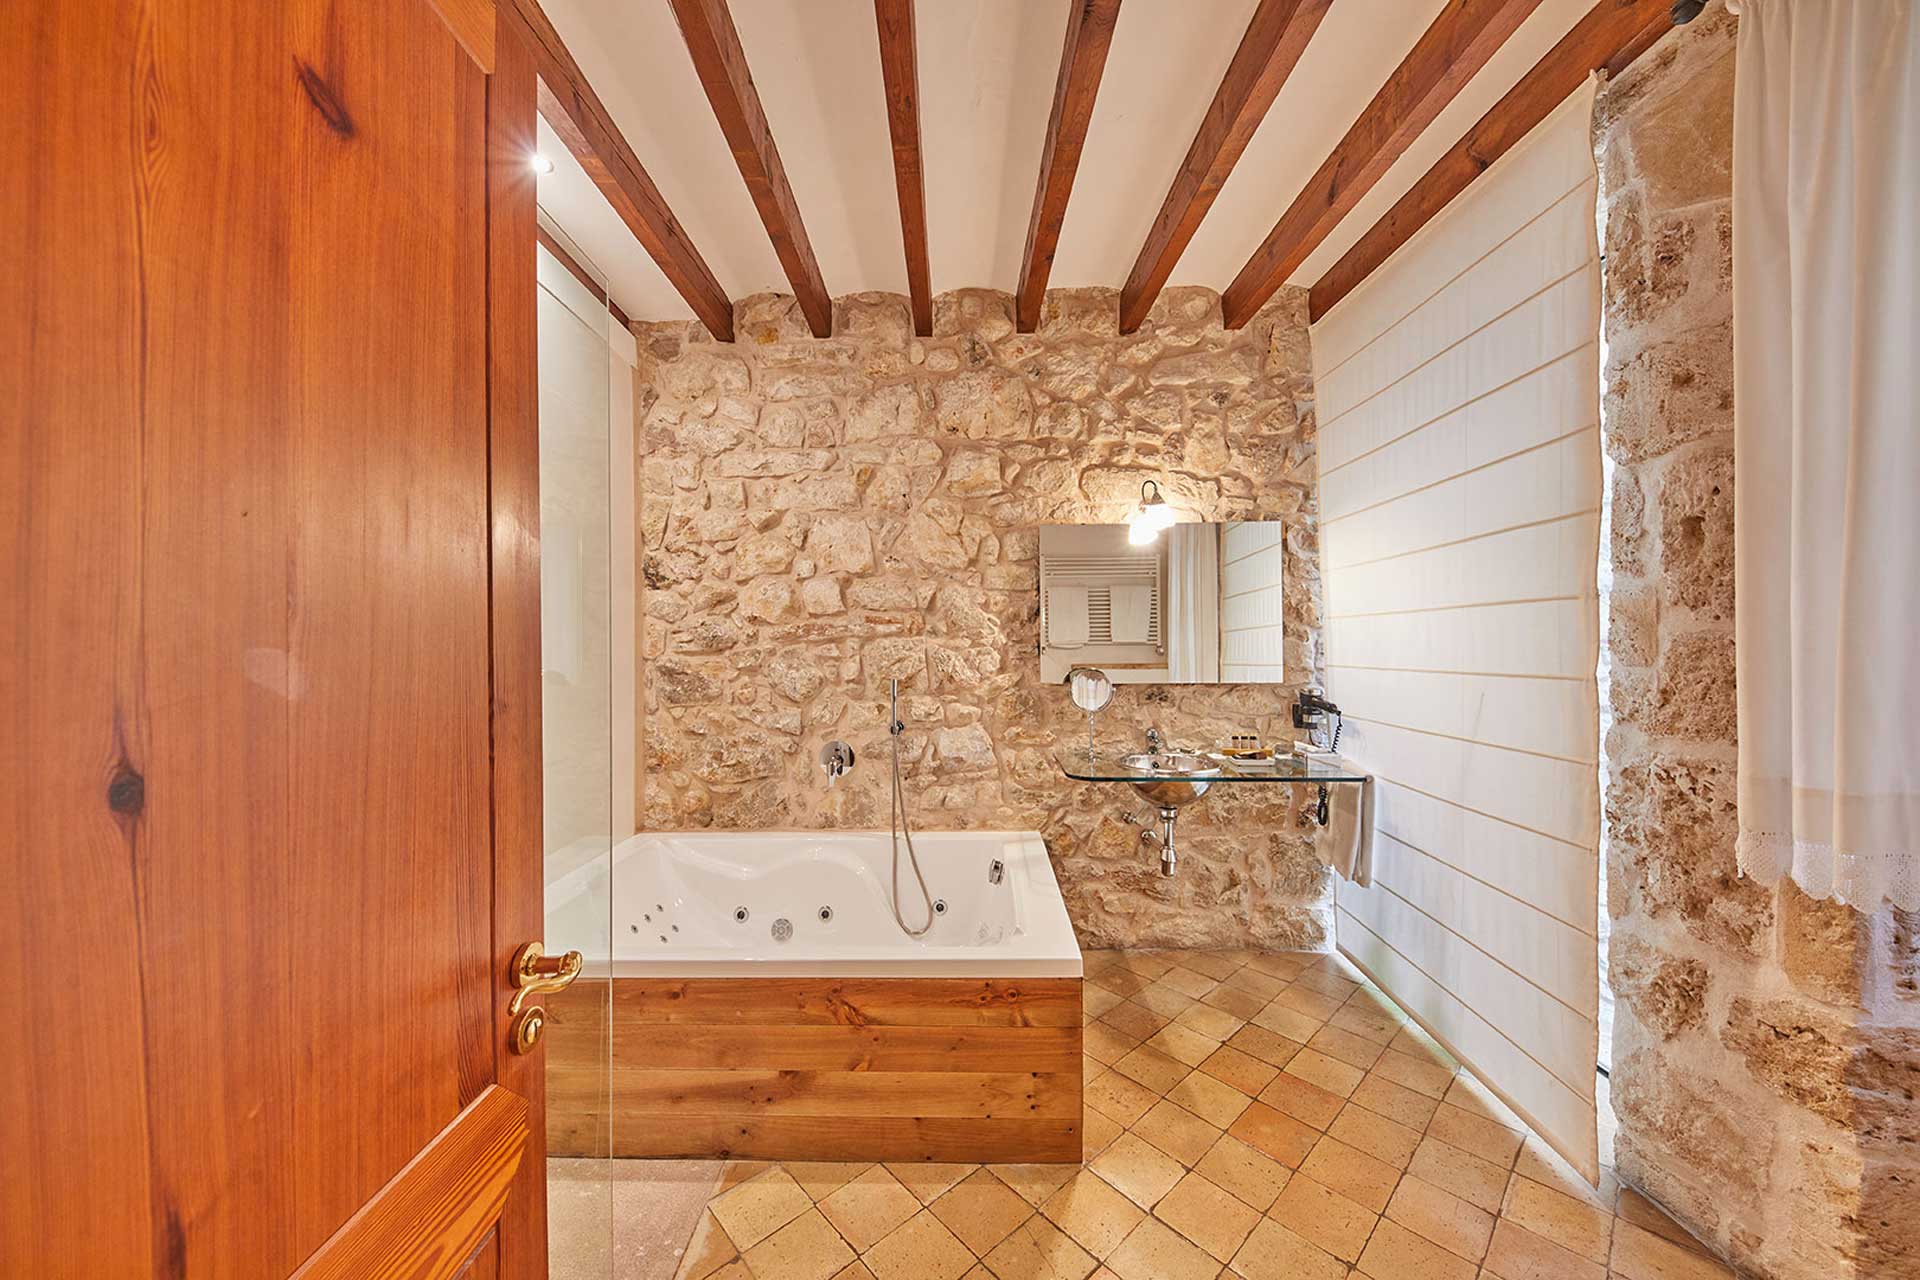 Finca-Hotel Cas Comte - En Suite bathroom with whirlpool